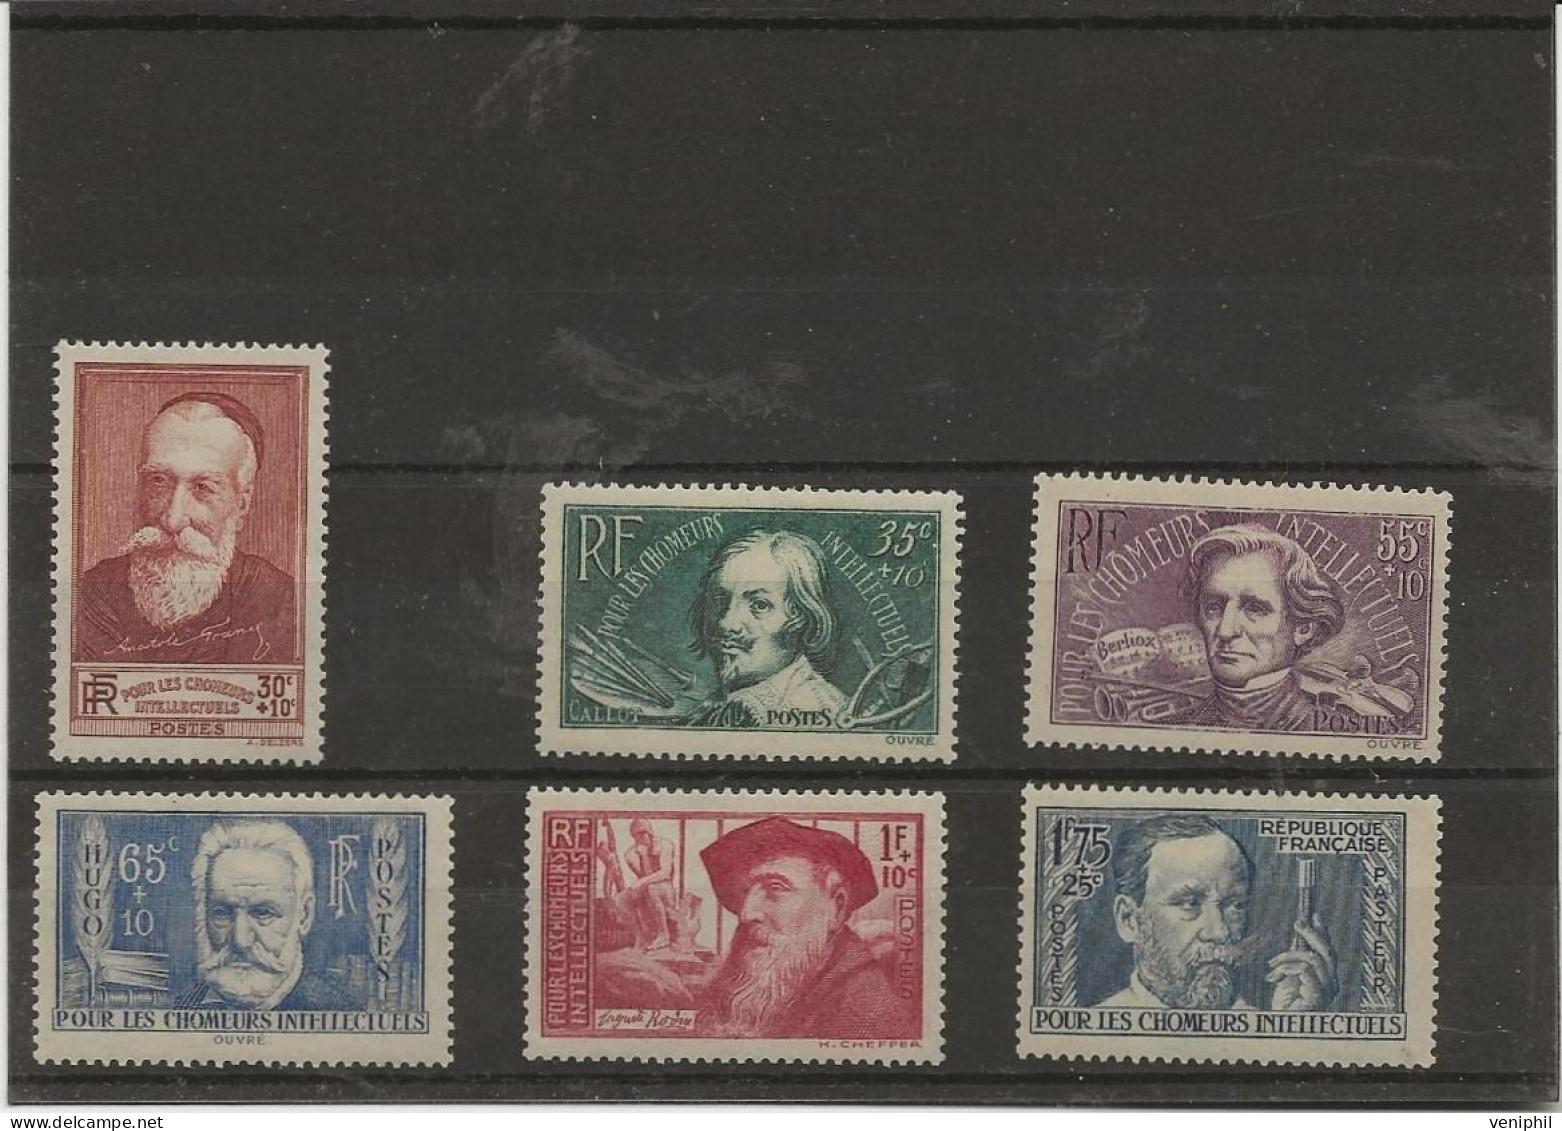 SERIE N° 380 A 385 -CHOMEURS INTELLECTUELS  -NEUVE SANS CHARNIERE -ANNEE 1938 - COTE : 92 € - Unused Stamps